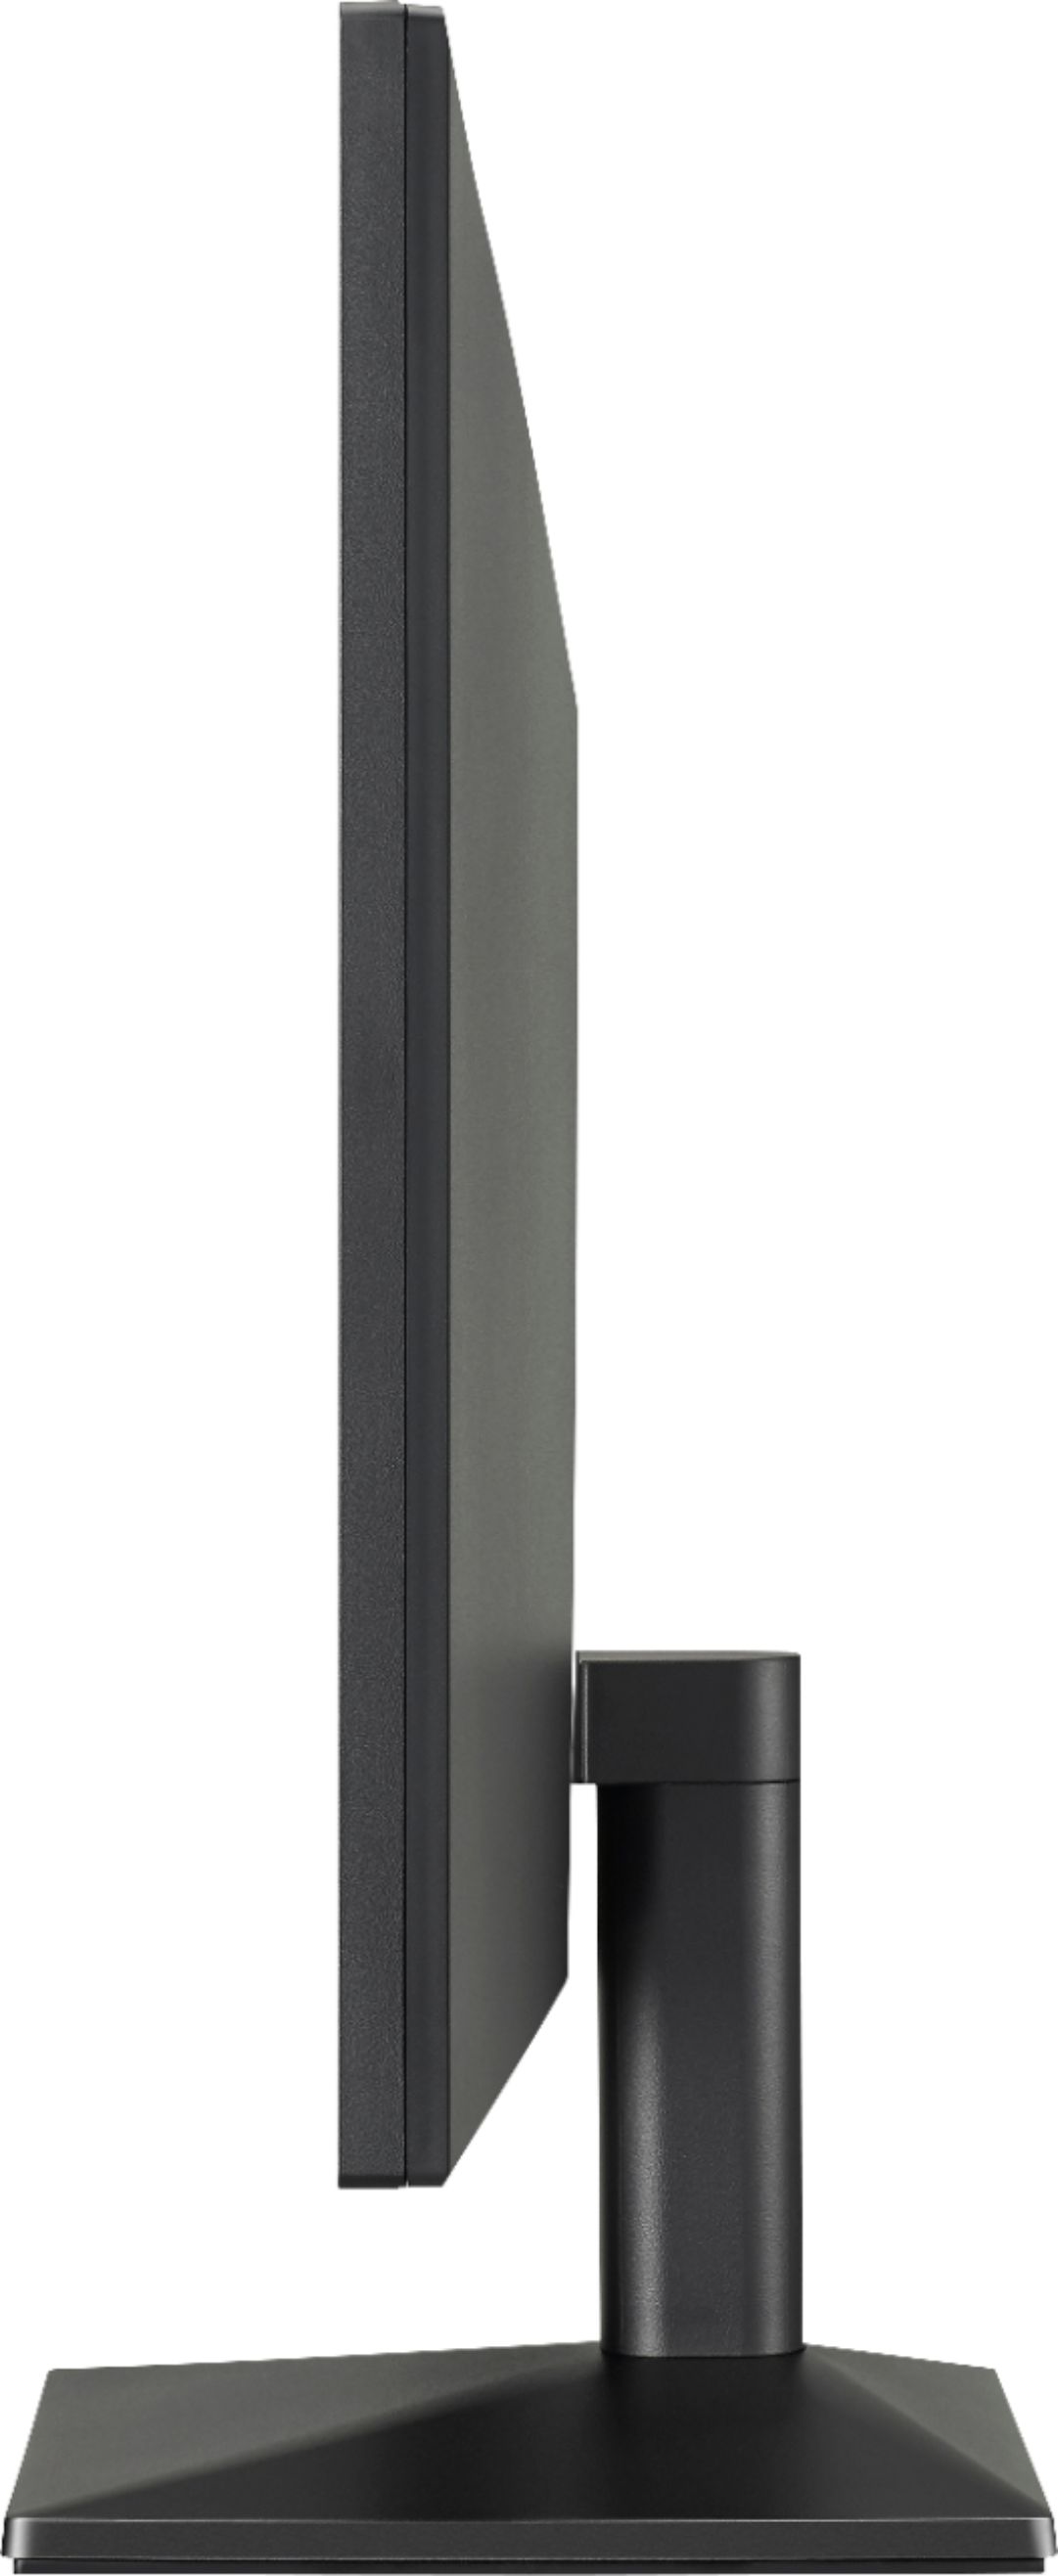 LG 24 IPS LED FHD FreeSync Monitor Black 24MP59HT-P - Best Buy